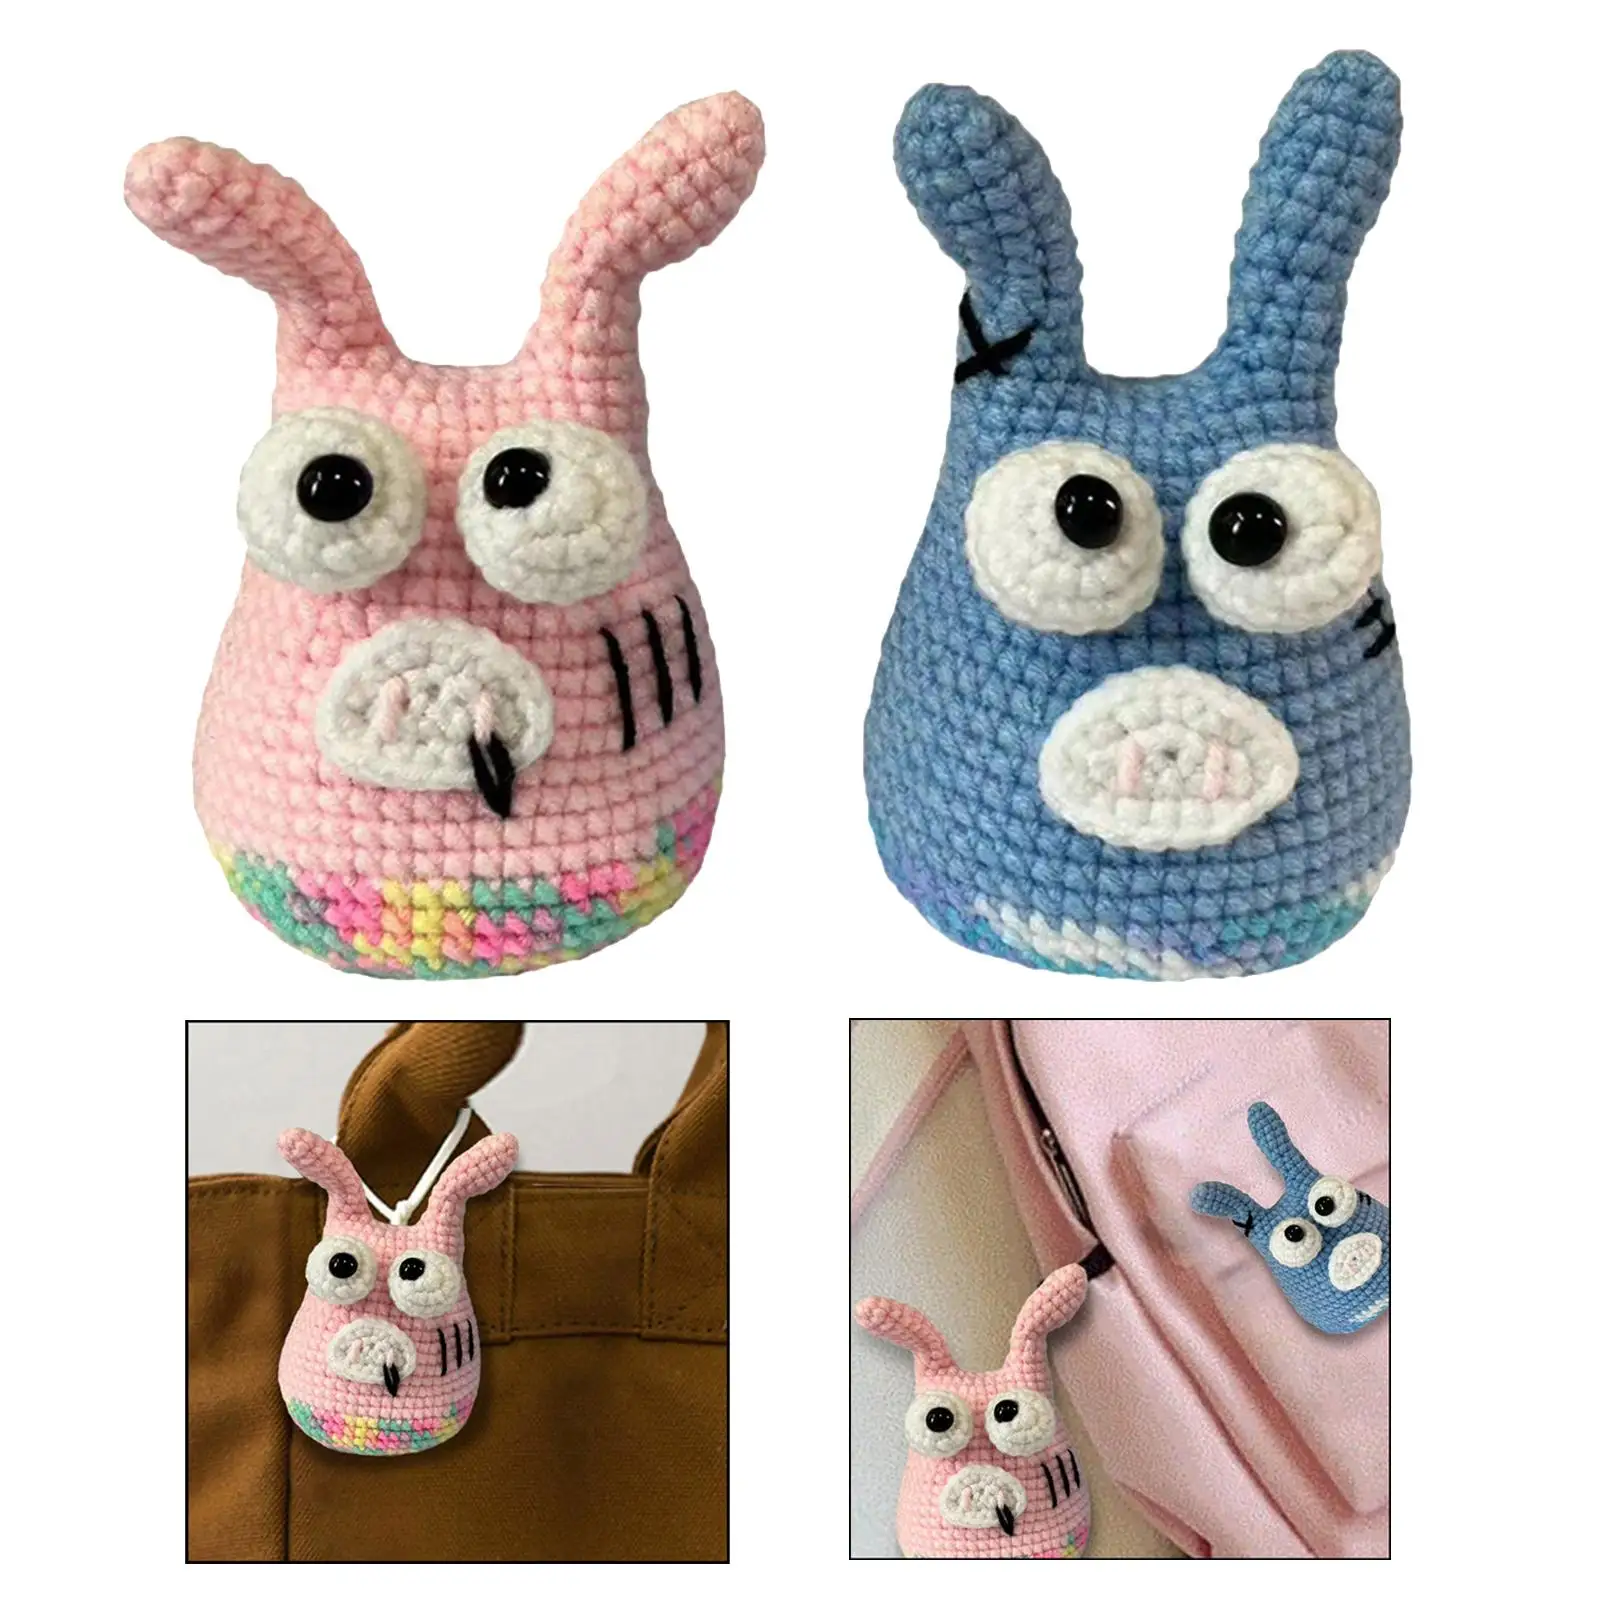 Crochet Animal Kit DIY Hand Knitting Toy Crochet Craft Set with Crochet Accessories Pig Doll for Knitting Lover Birthday Gift